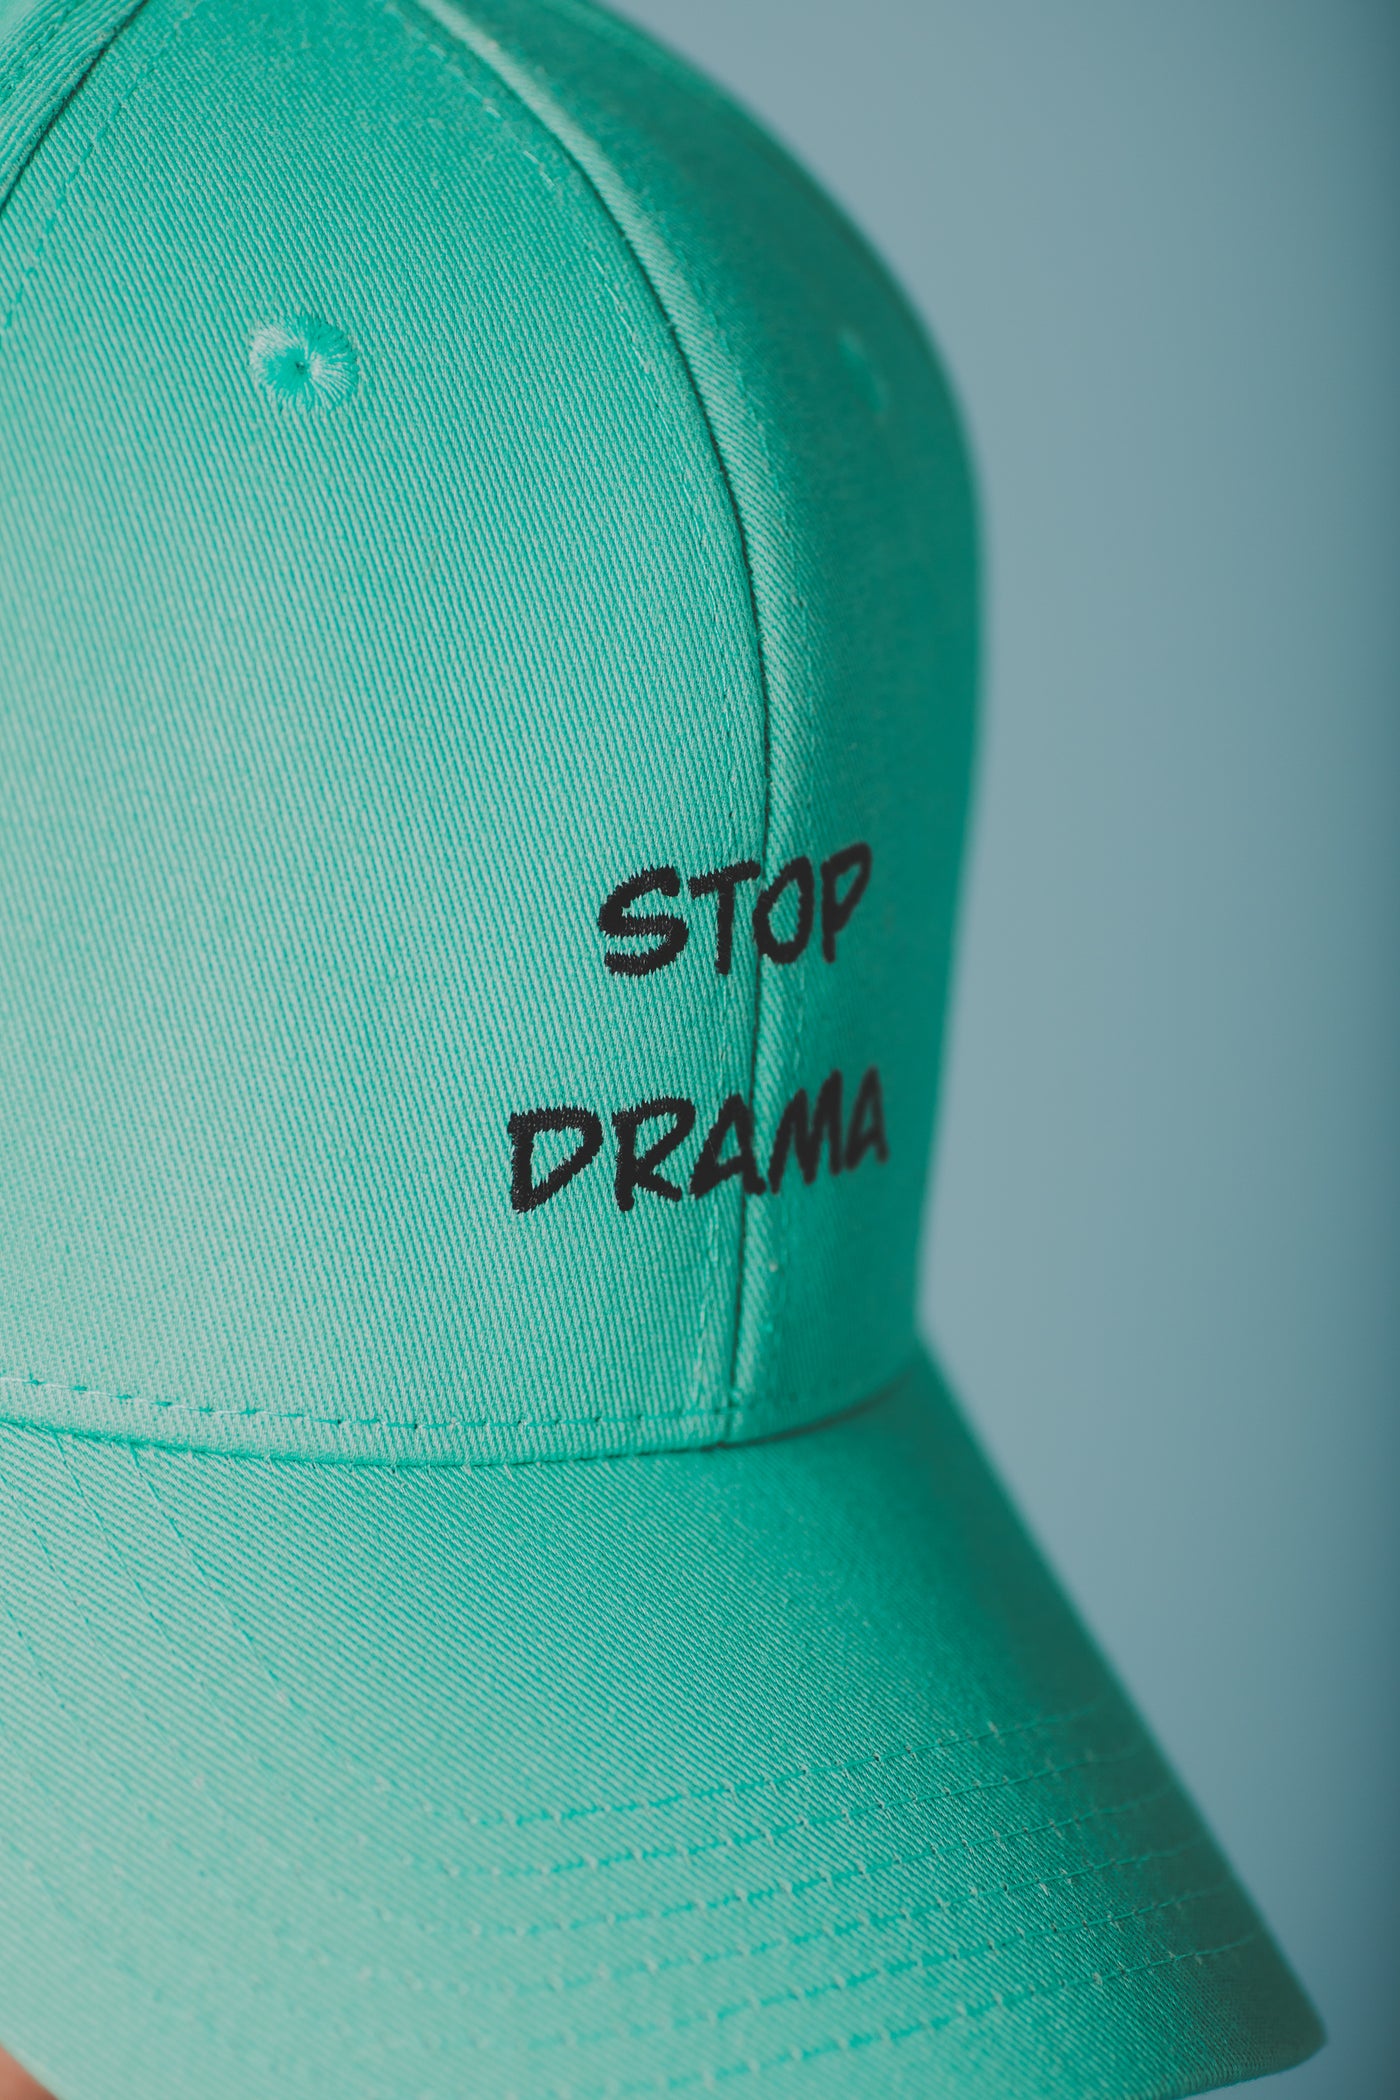 Stop Drama cap